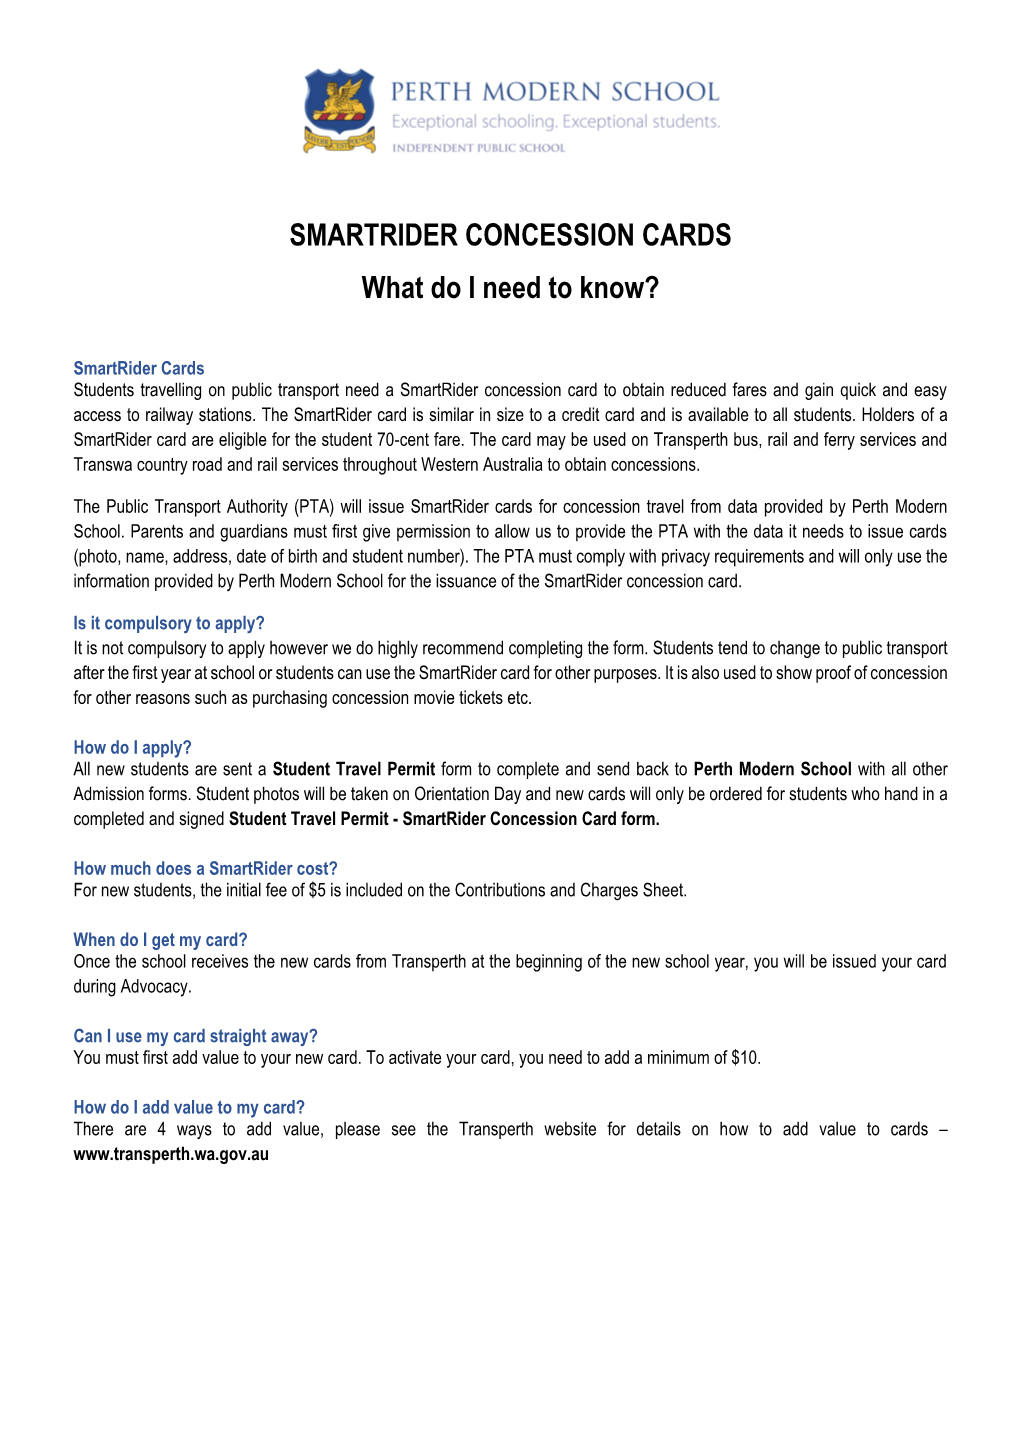 Smartrider Information Sheet